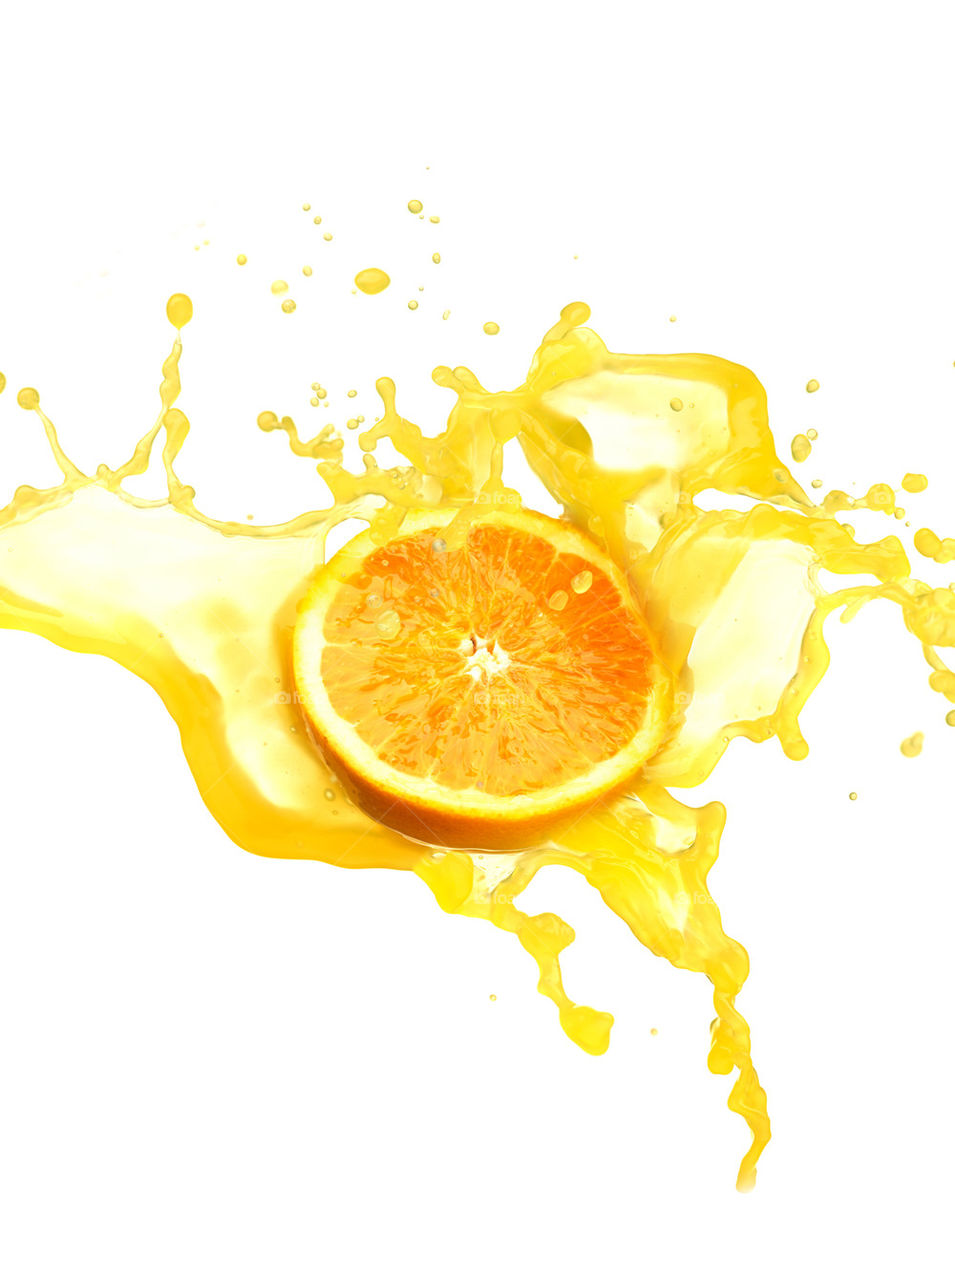 juice orange fresh citrus by garhernan